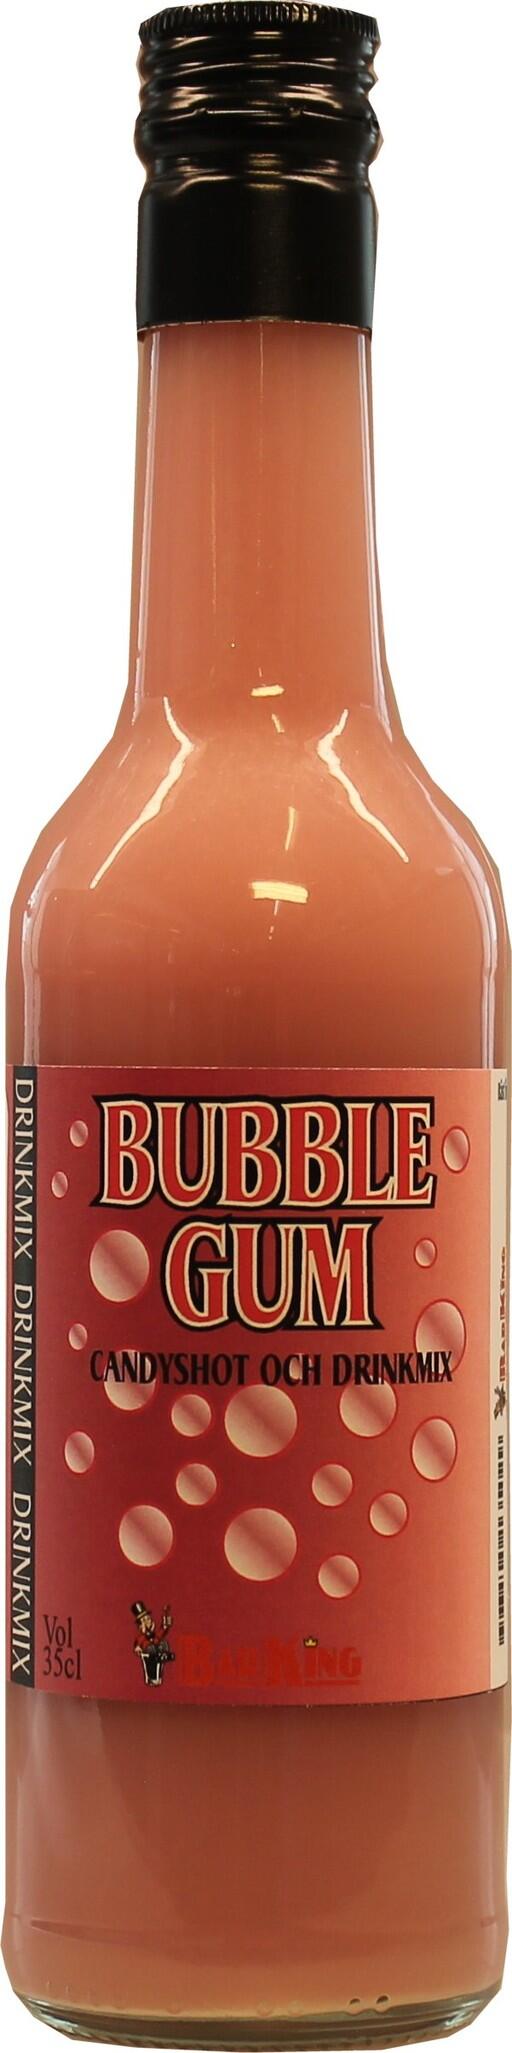 Bubblegum 35 cl drinkmix från BarKing.